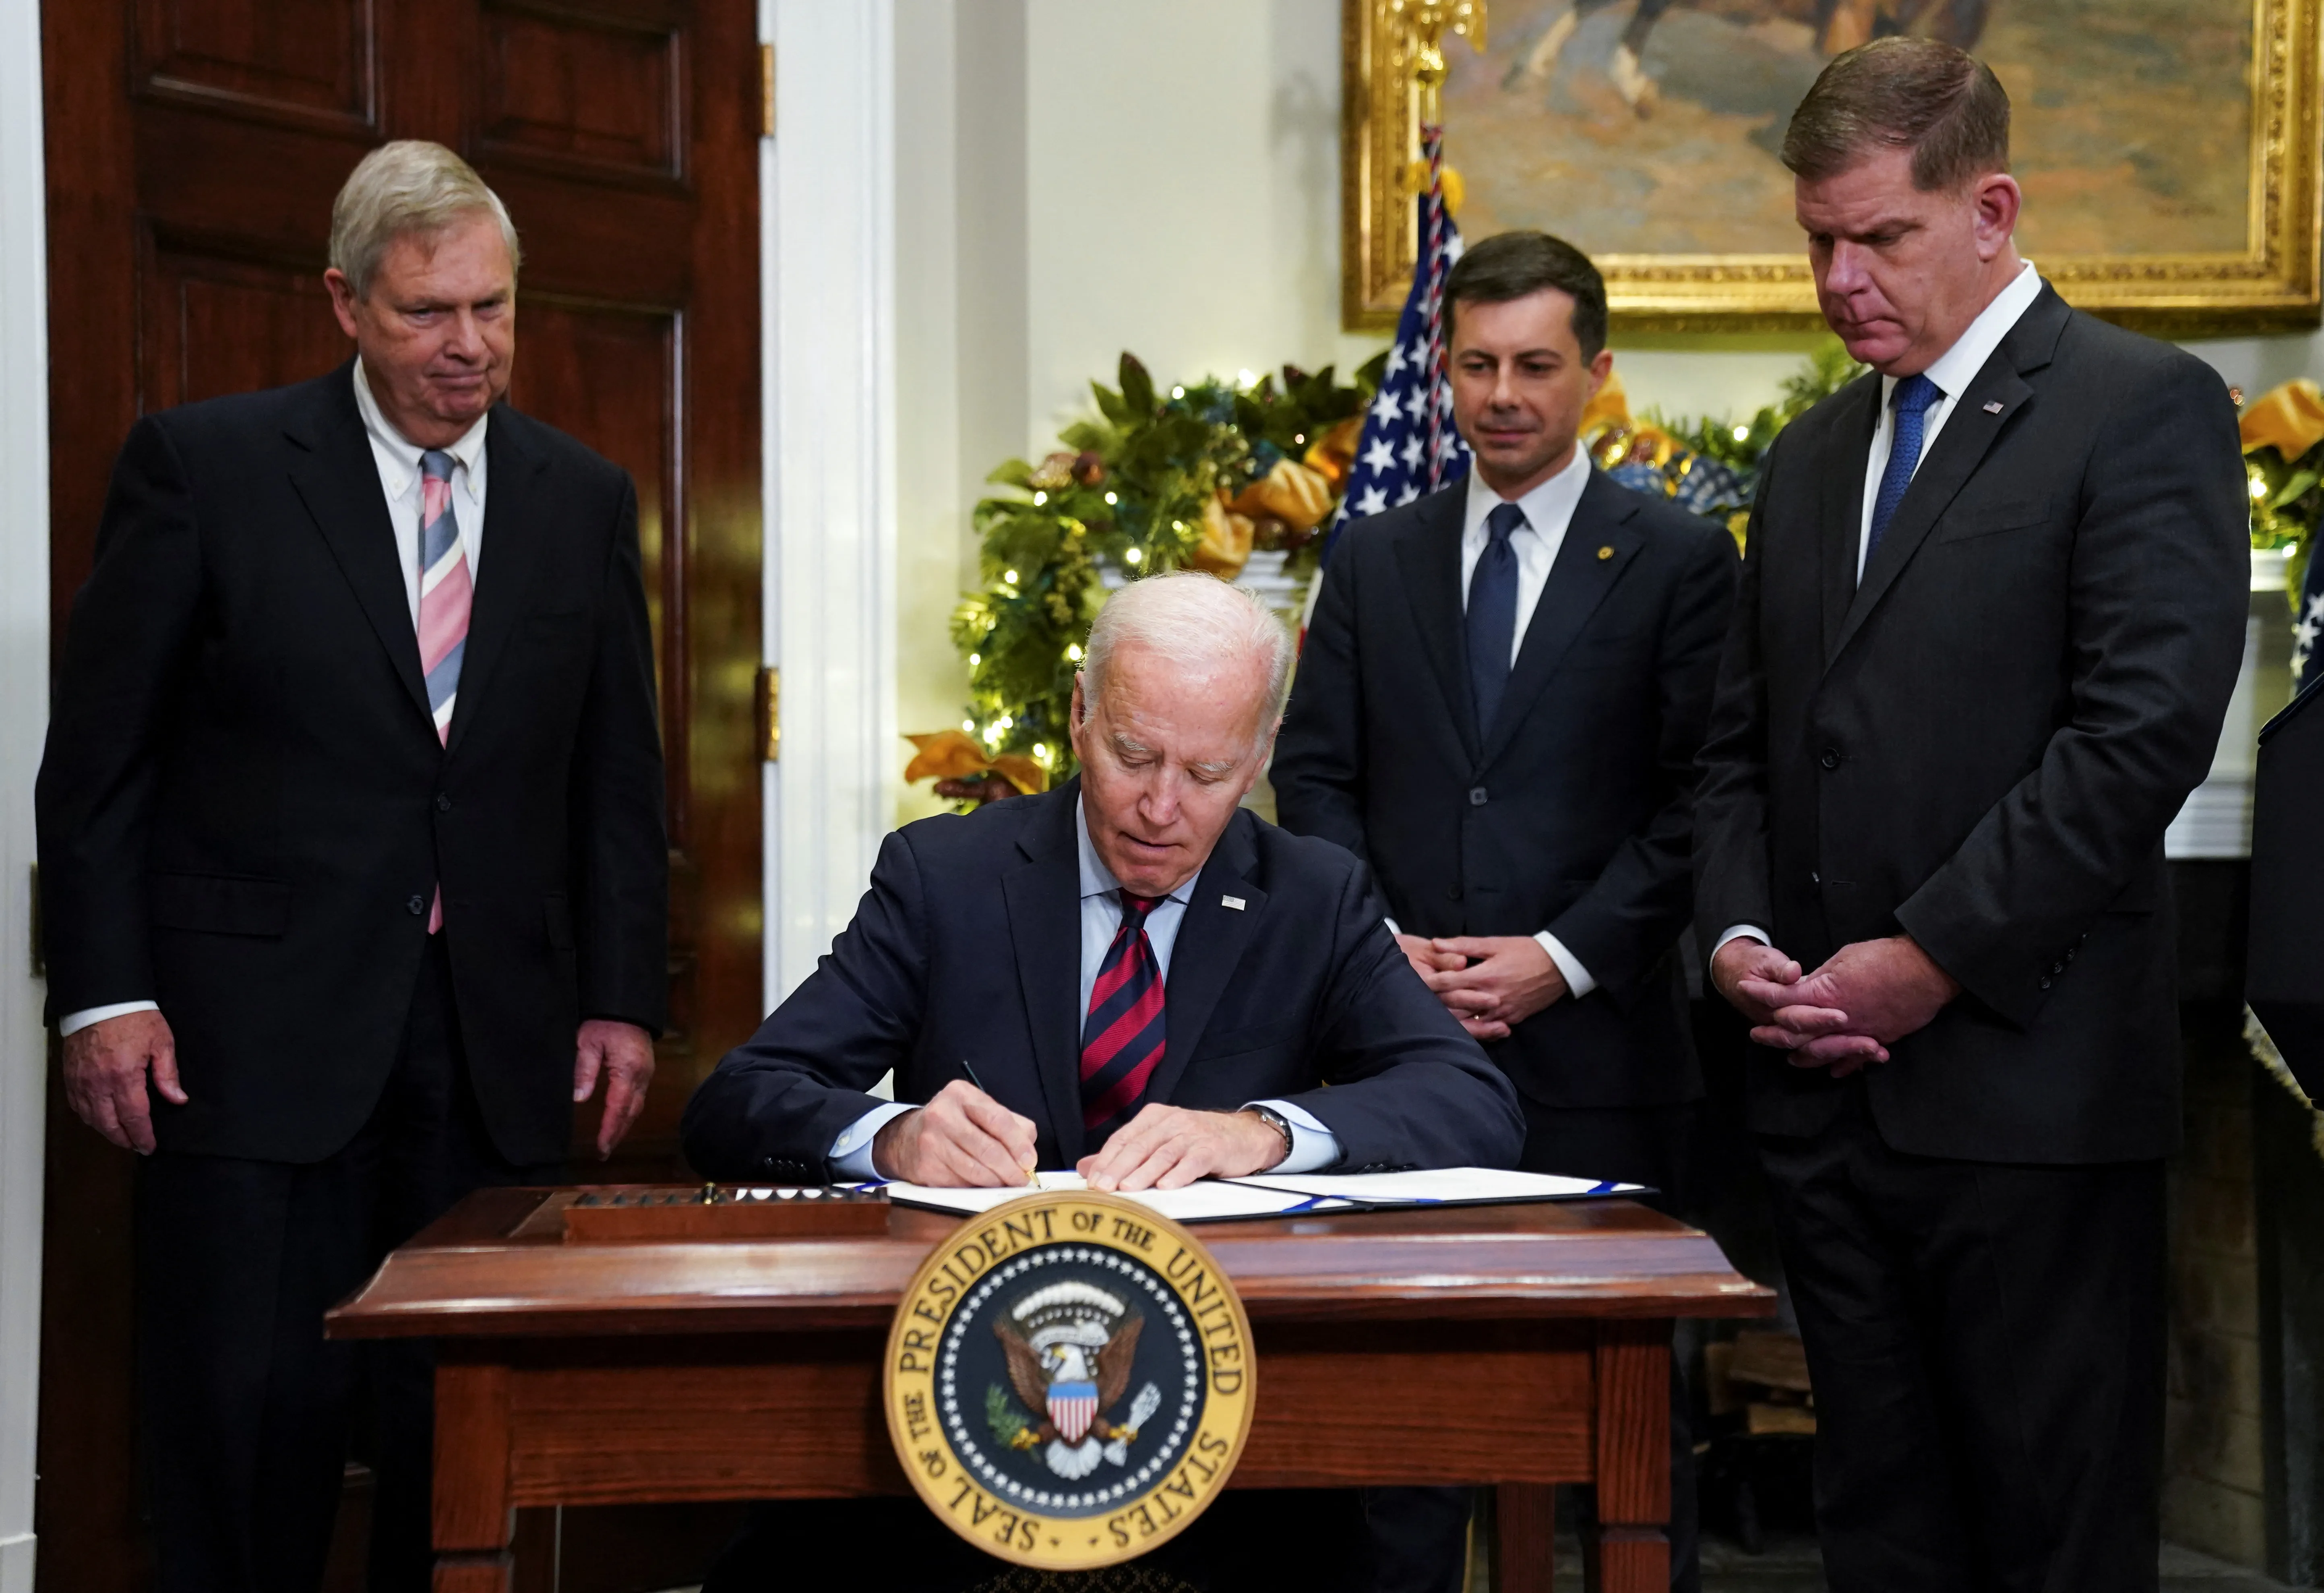 Tracking regulatory changes in the Biden era | Brookings